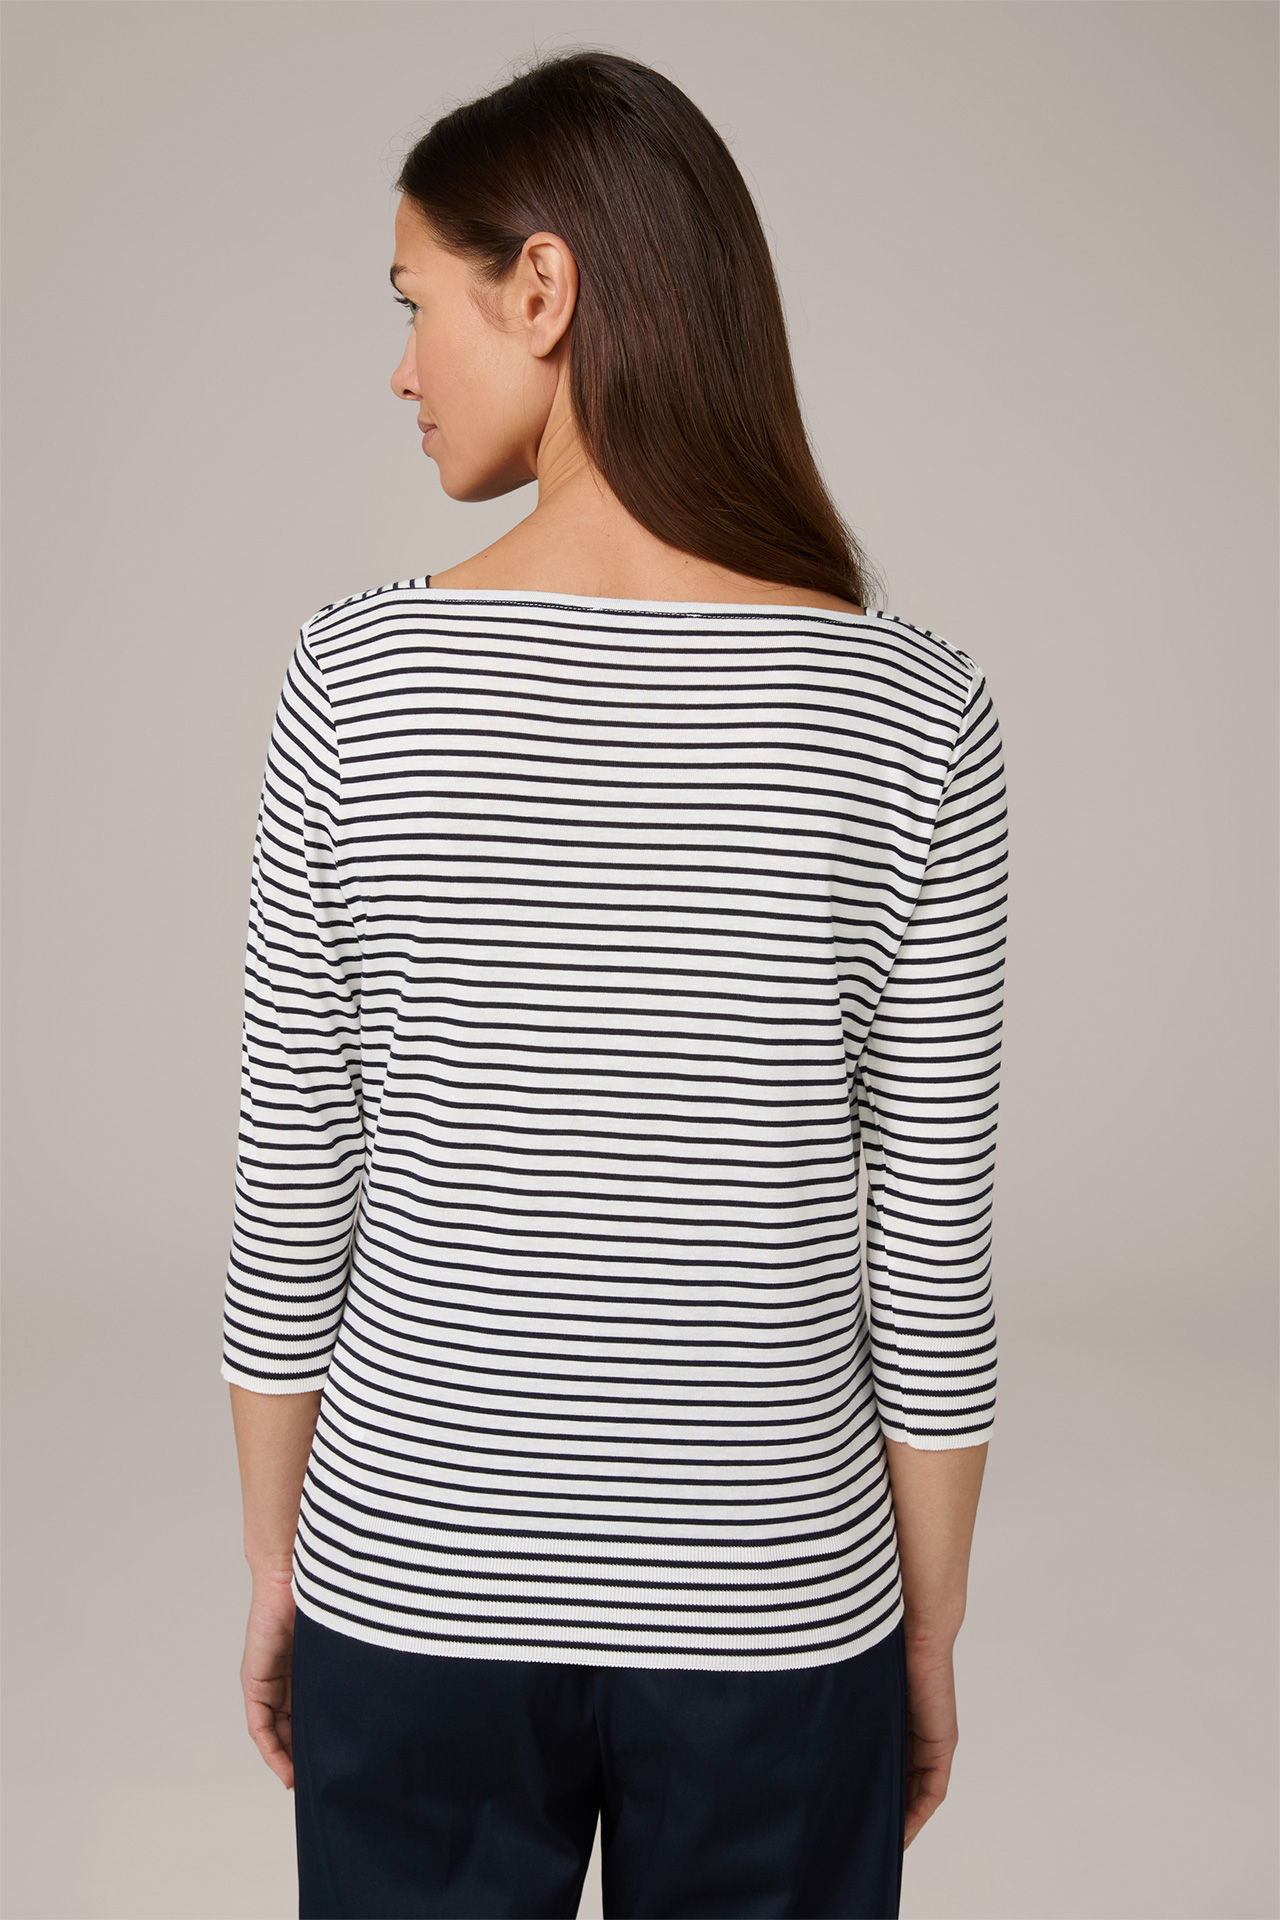 Tencel/Cotton Shirt in Navy and Ecru Stripes